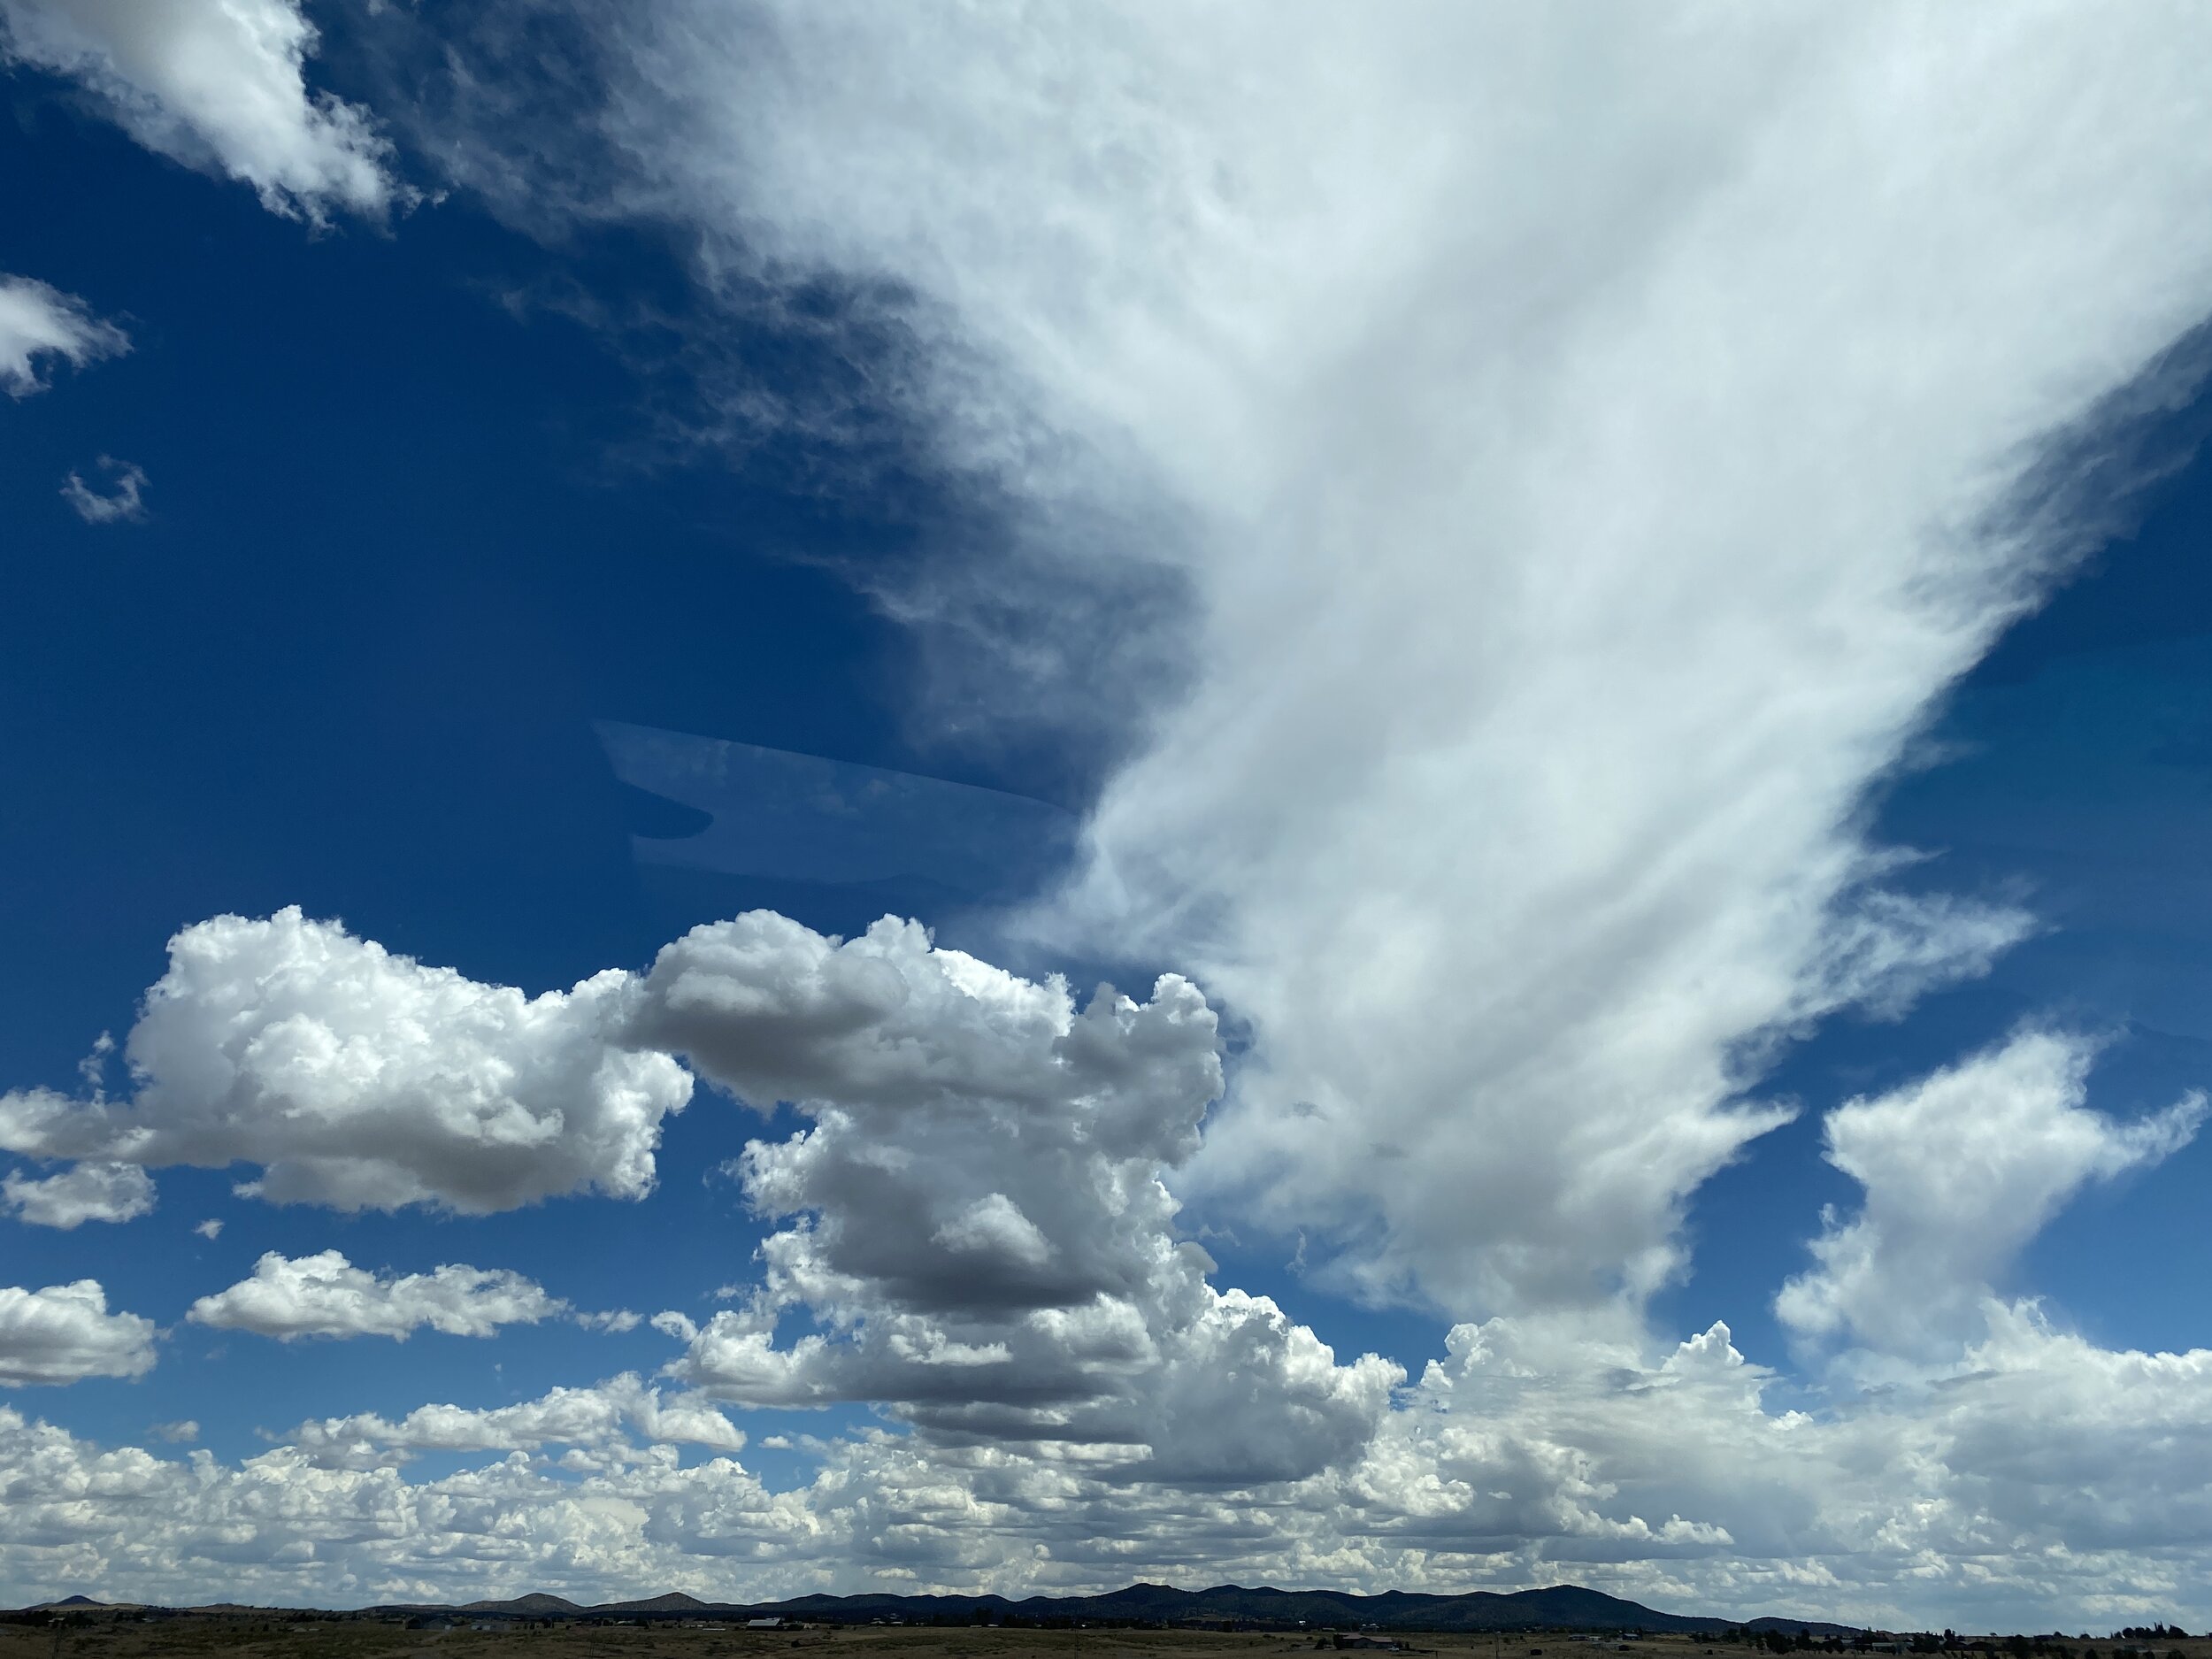  Cumulus and altostratus (with fractus), Sonoita, Southern Arizona, USA,  by Roseann Hanson 